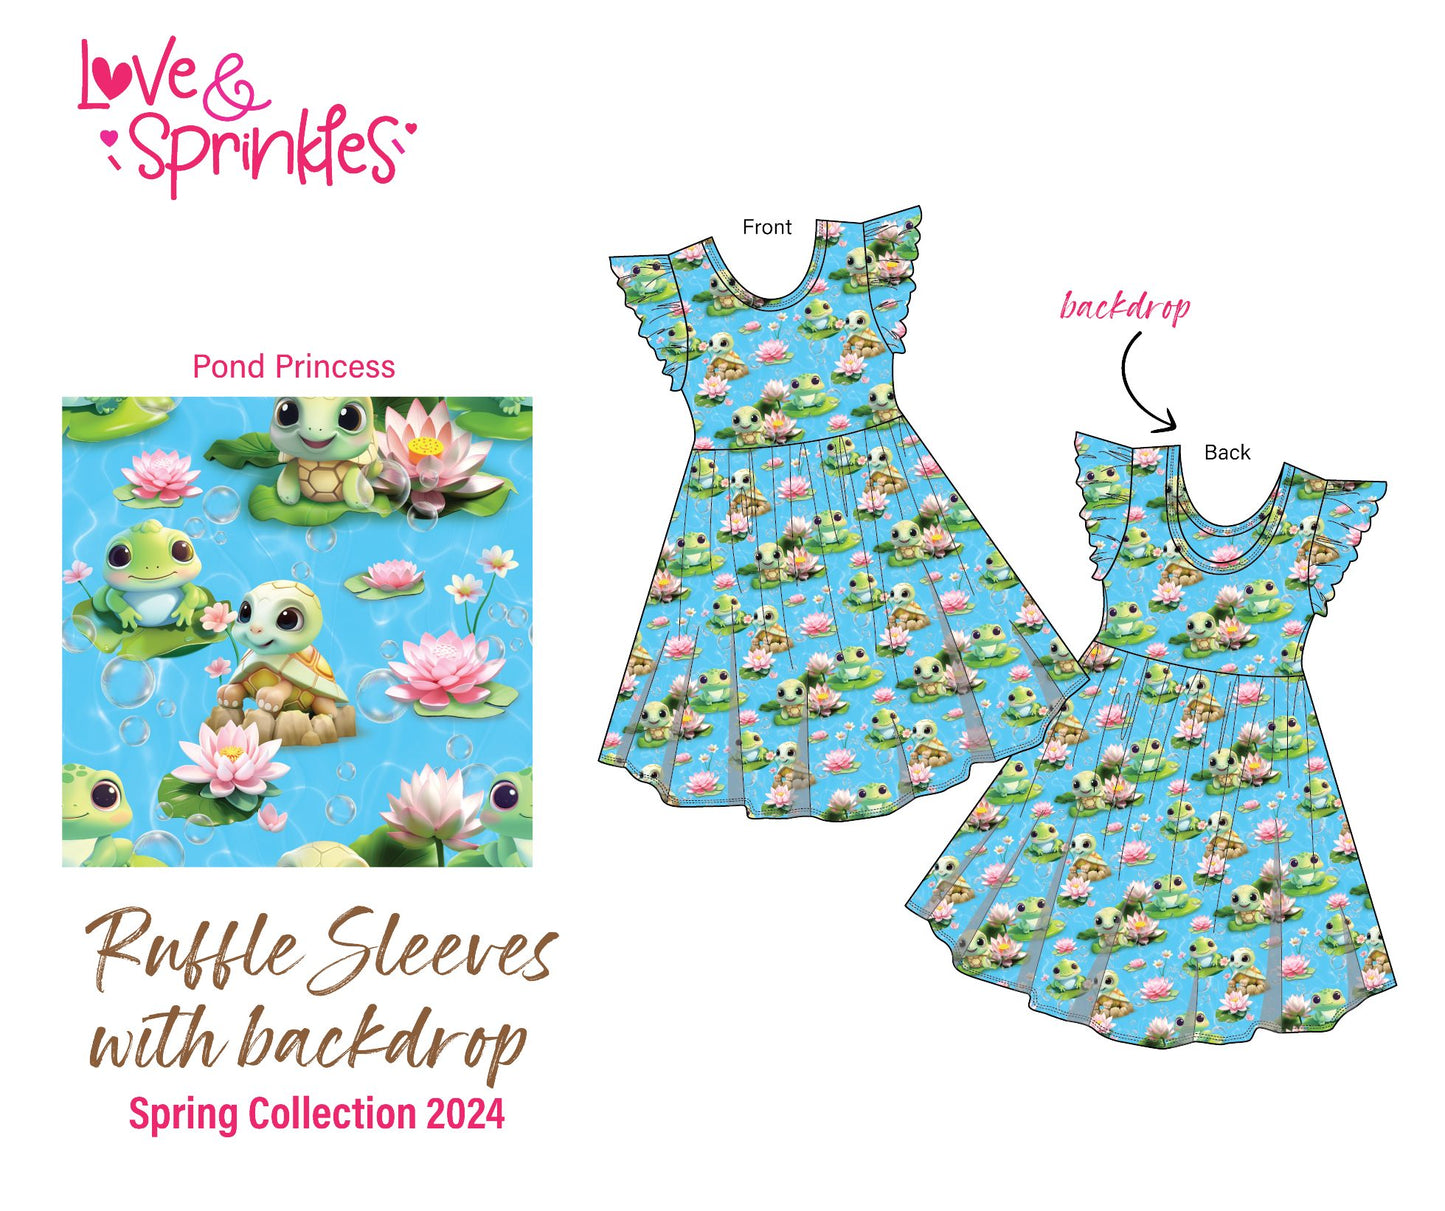 Love & Sprinkles Pond Princess Ruffle Sleeve with Backdrop